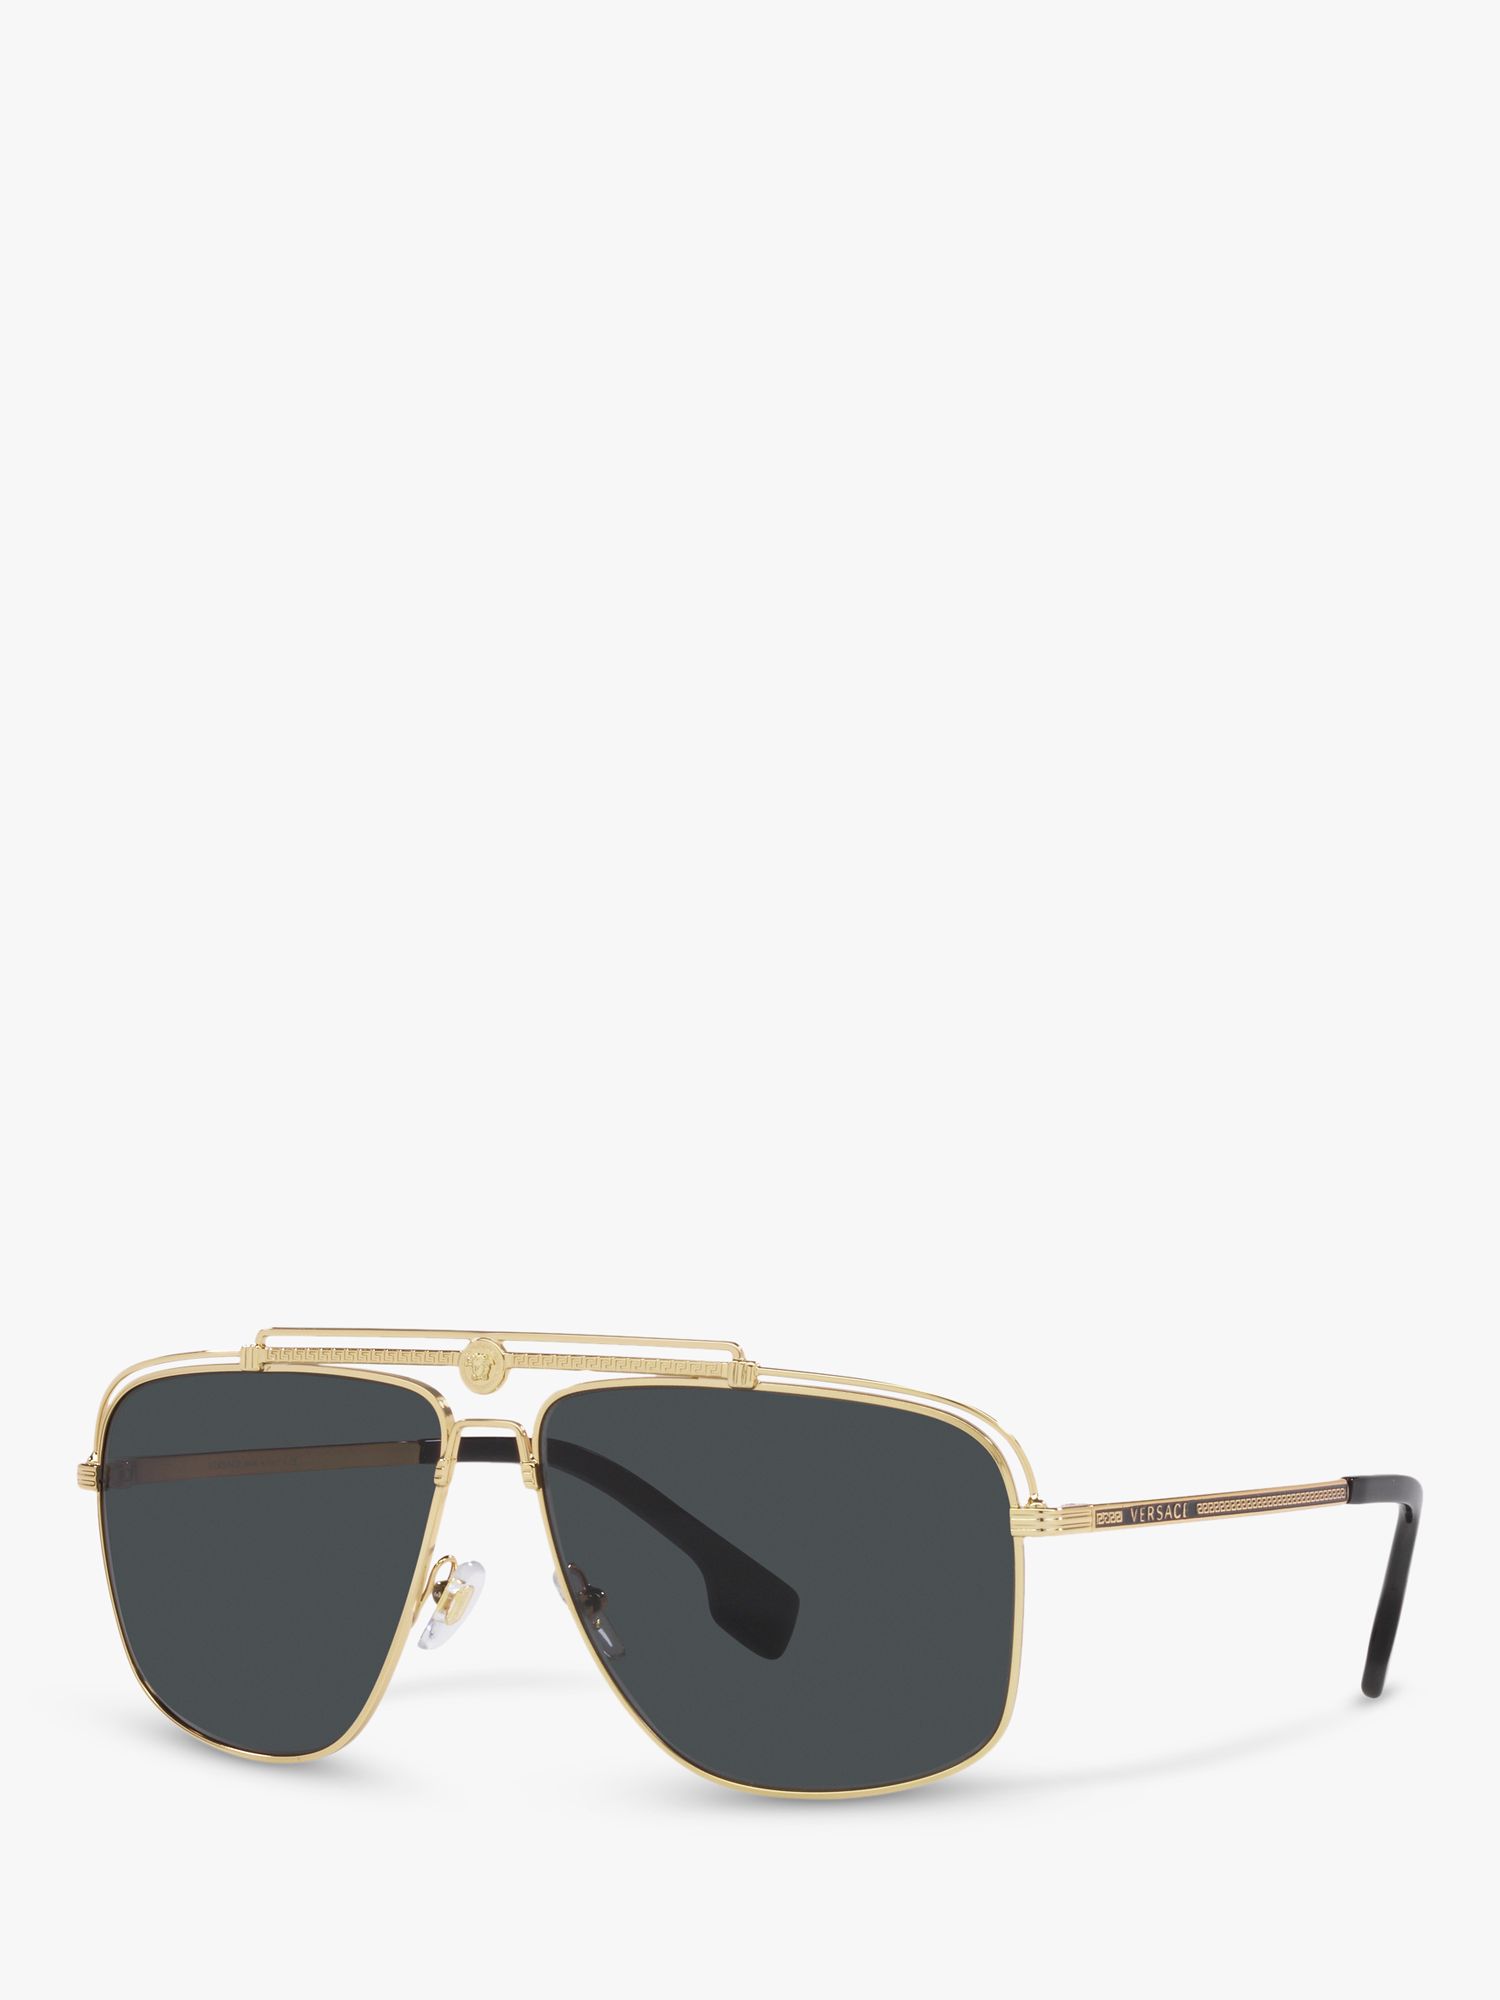 Versace VE2242 Men's Rectangular Sunglasses, Gold/Grey at John Lewis ...